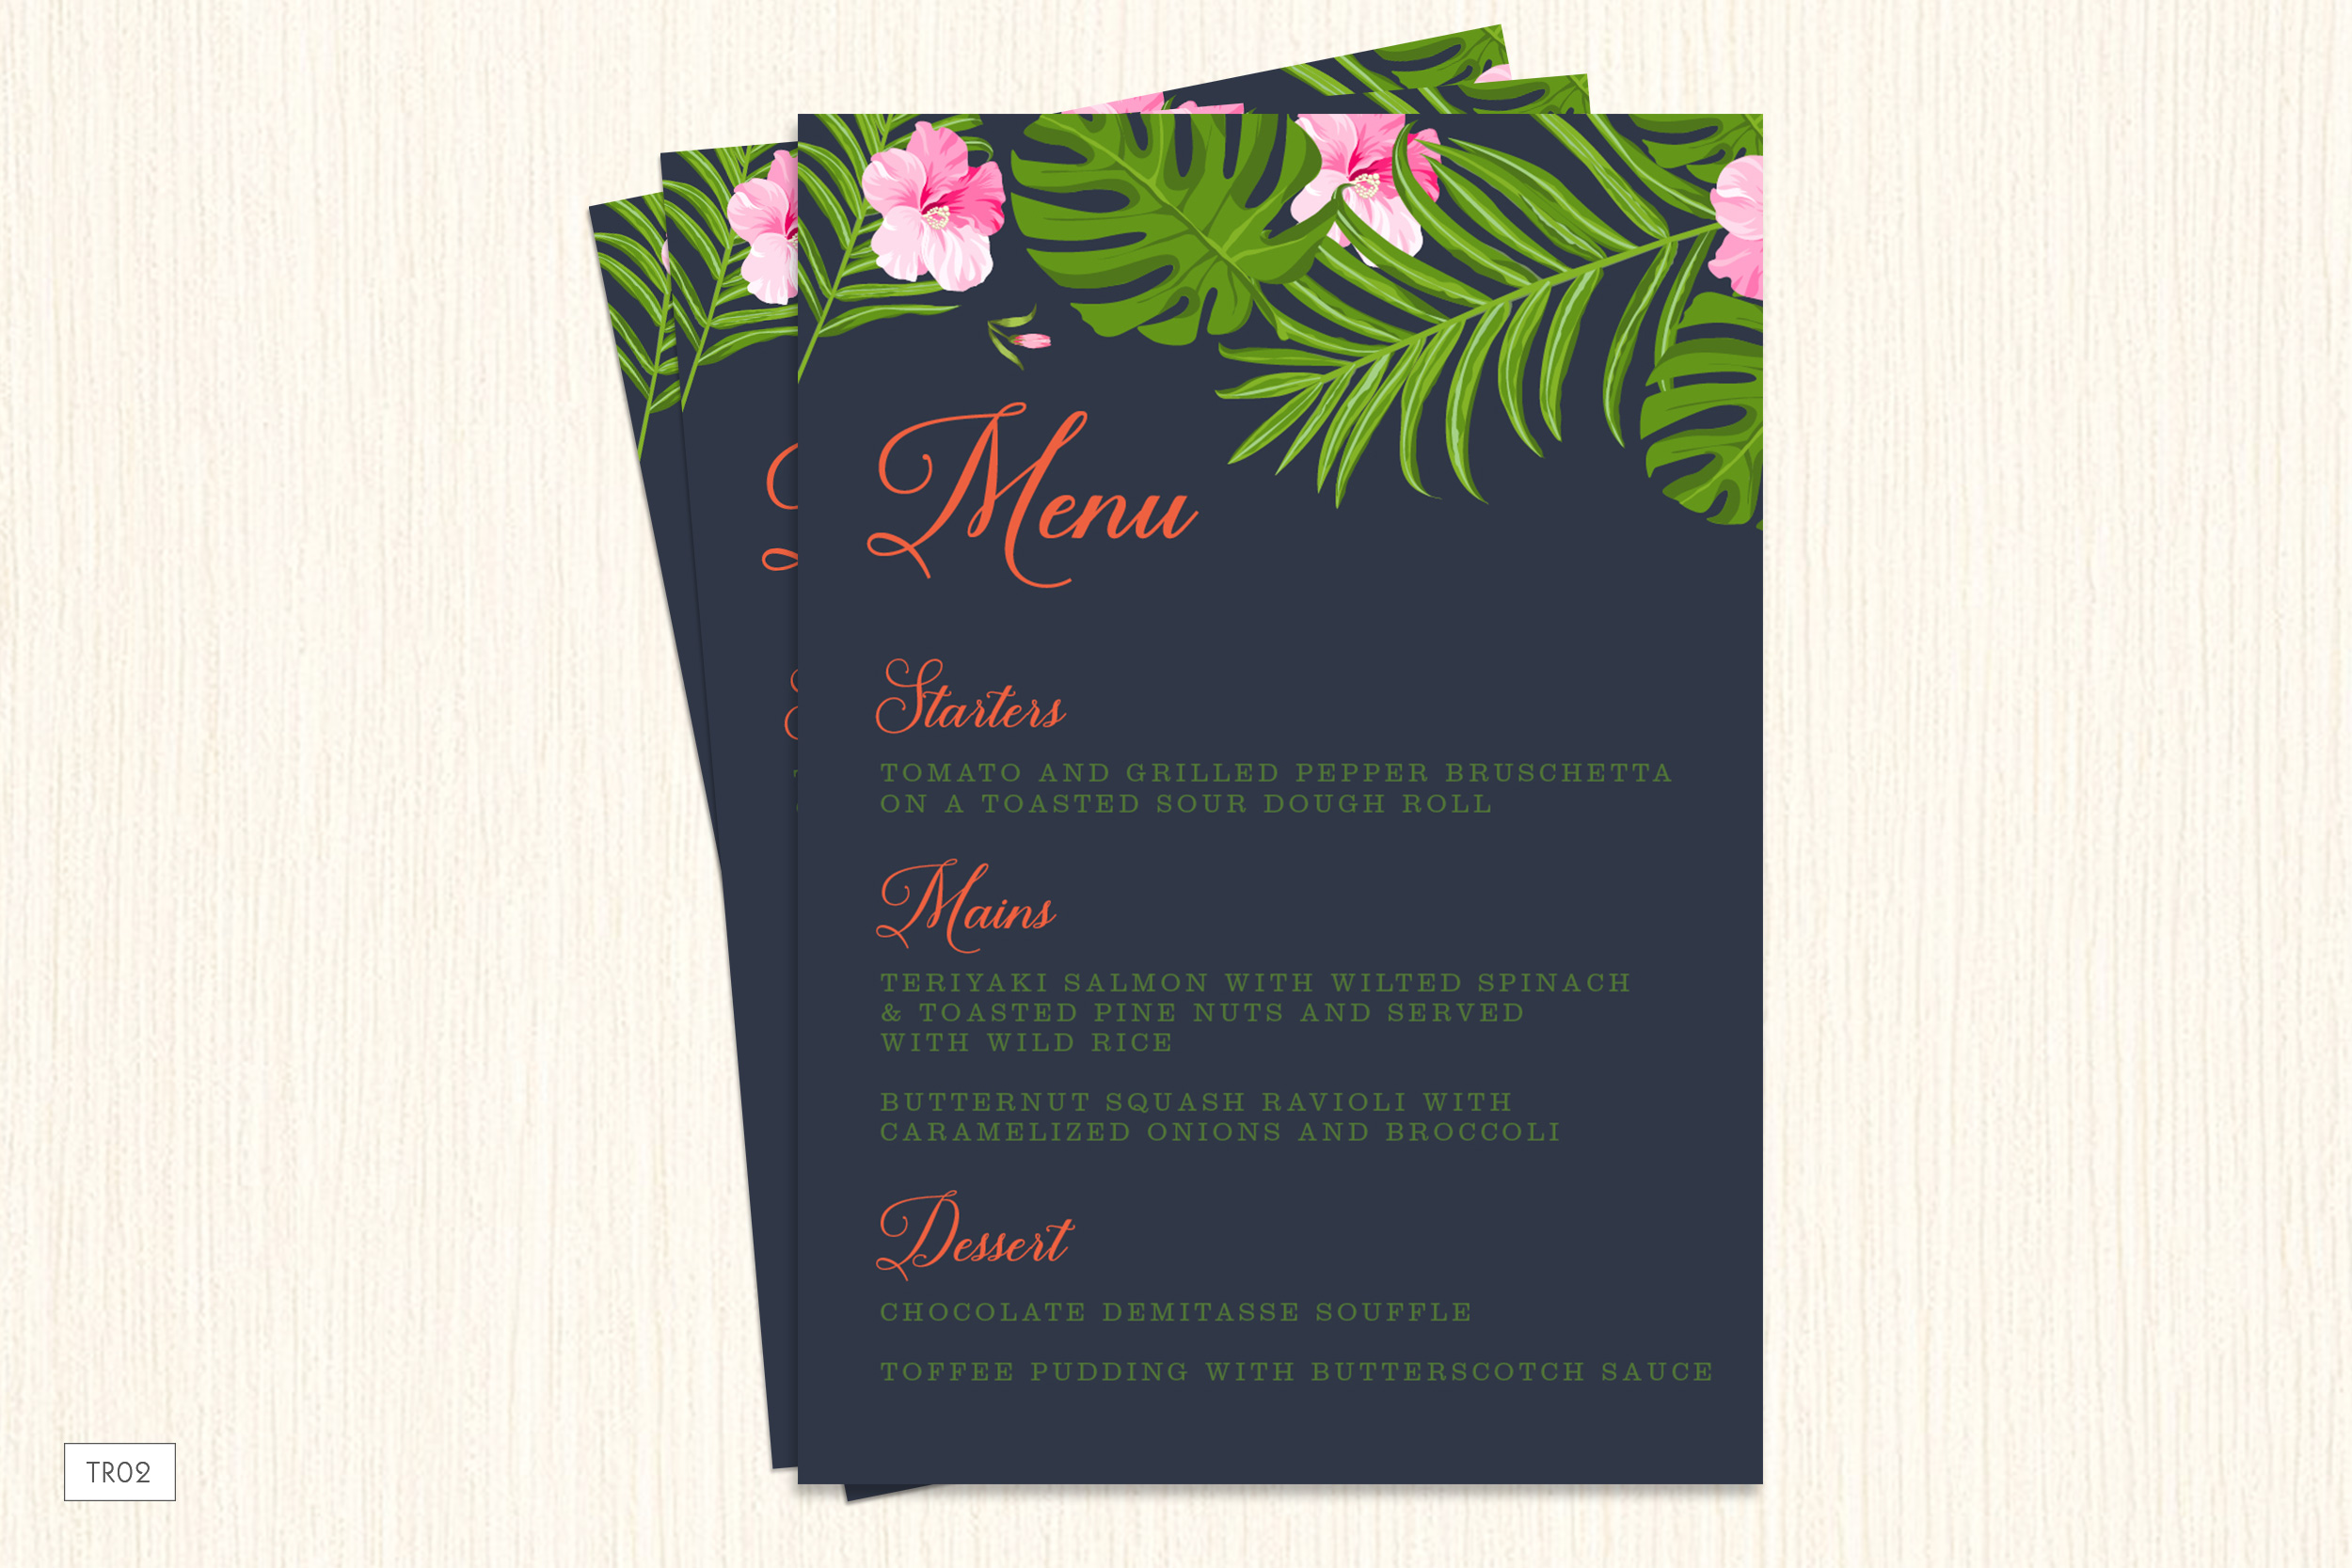 tr02-tropics-menu-wedding-invitation.jpg